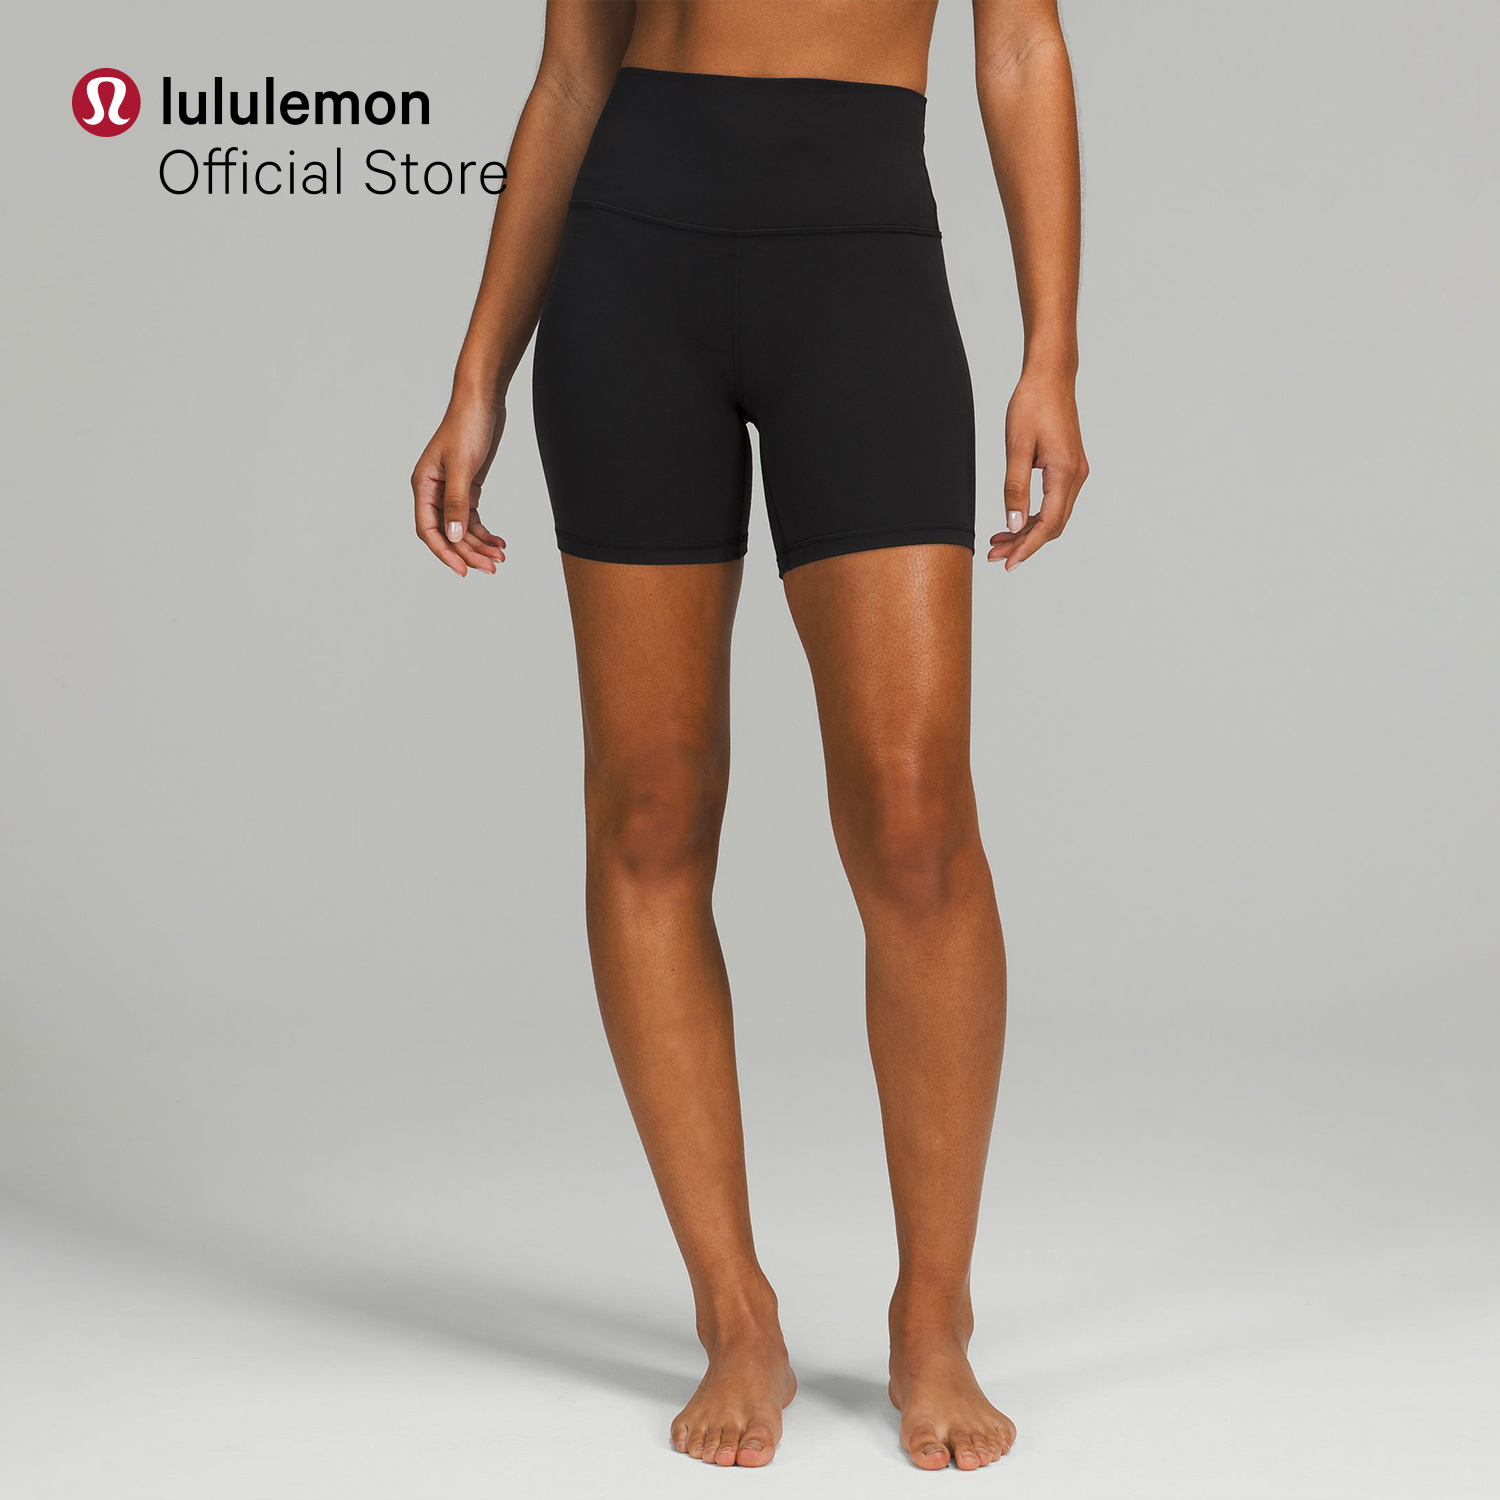 lululemon Women's Align™ Wide Leg High-Rise Pant 28 - Asia Fit - yoga pants